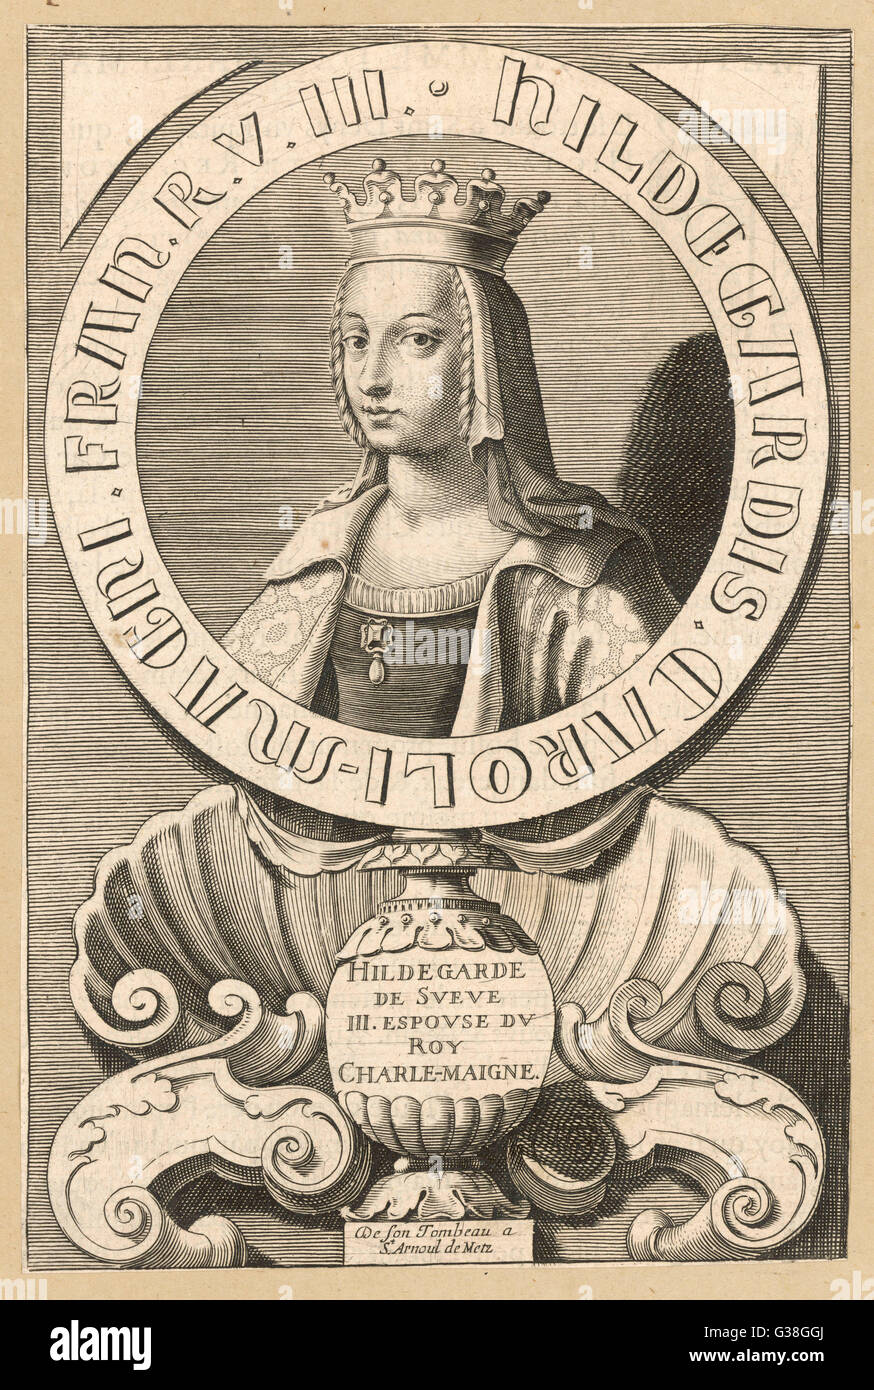 HILDEGARDE de Sueve (Swabia) third queen of Charlemagne        Date: circa 800 Stock Photo